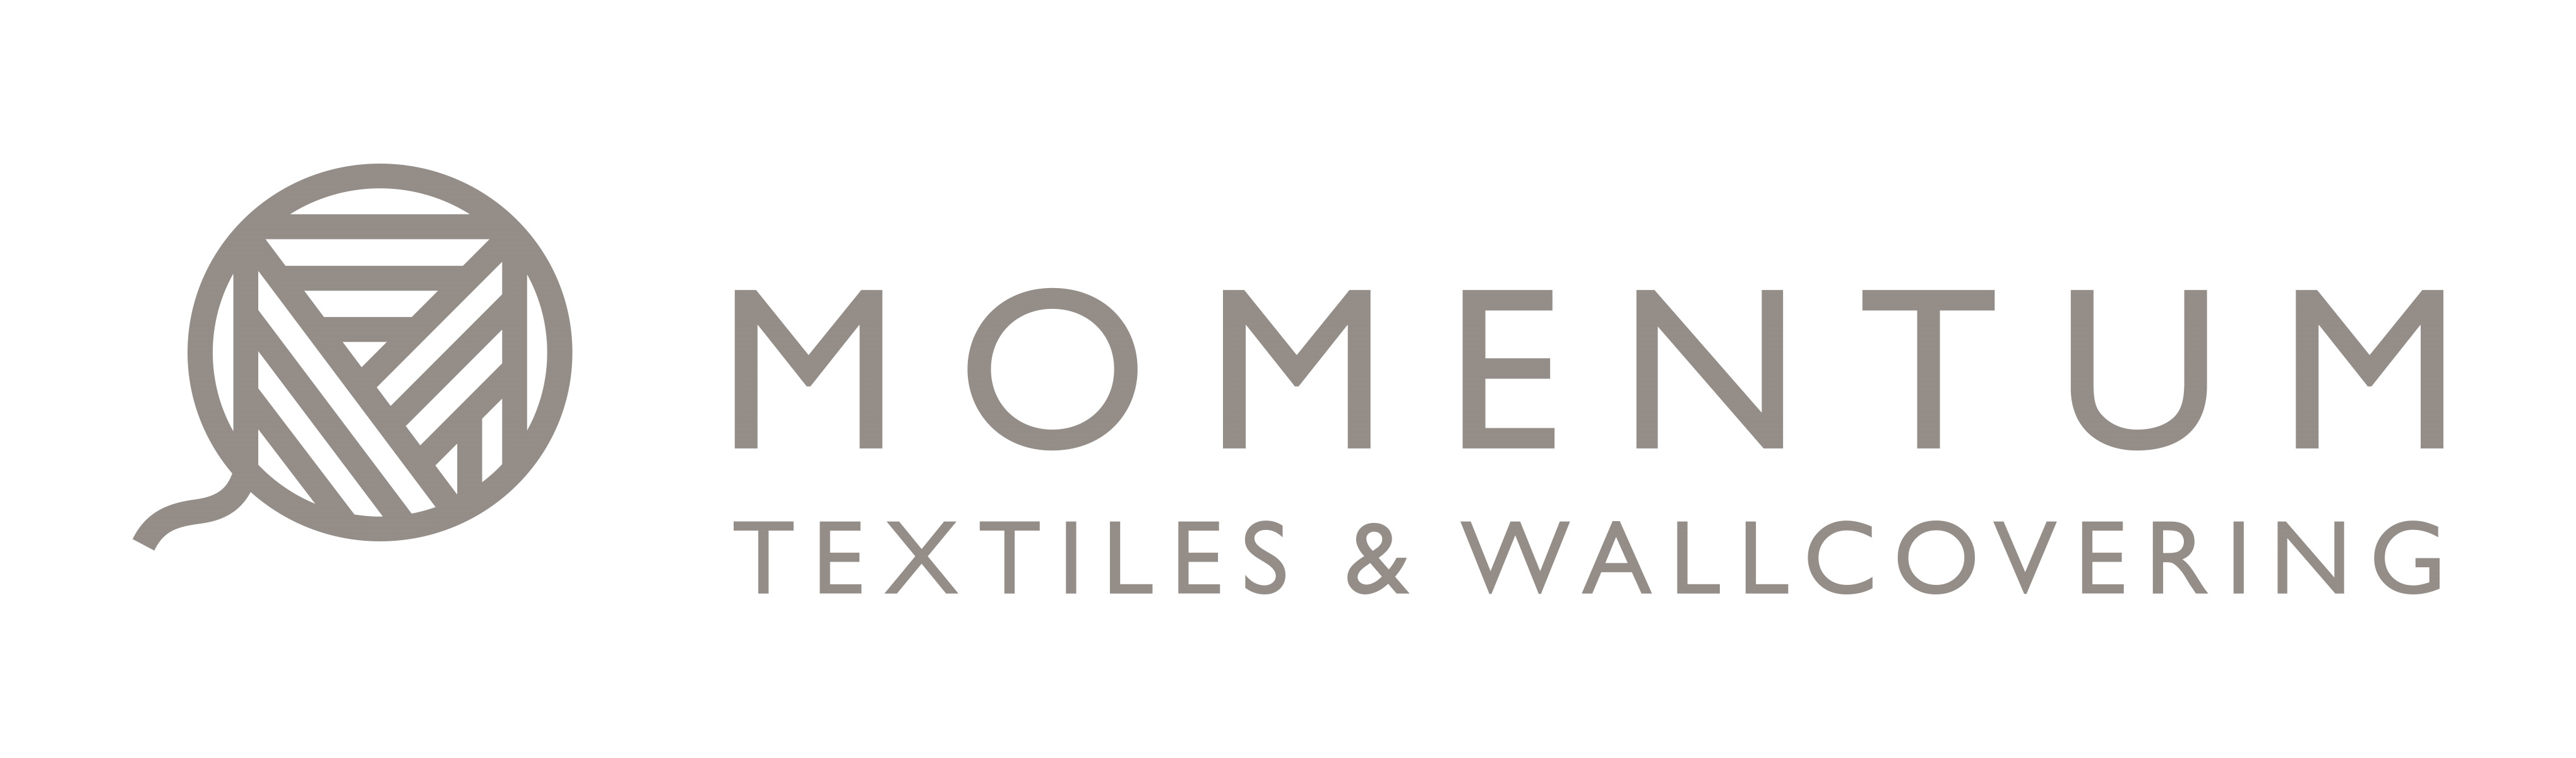 Momentum Textiles & Wallcovering logo